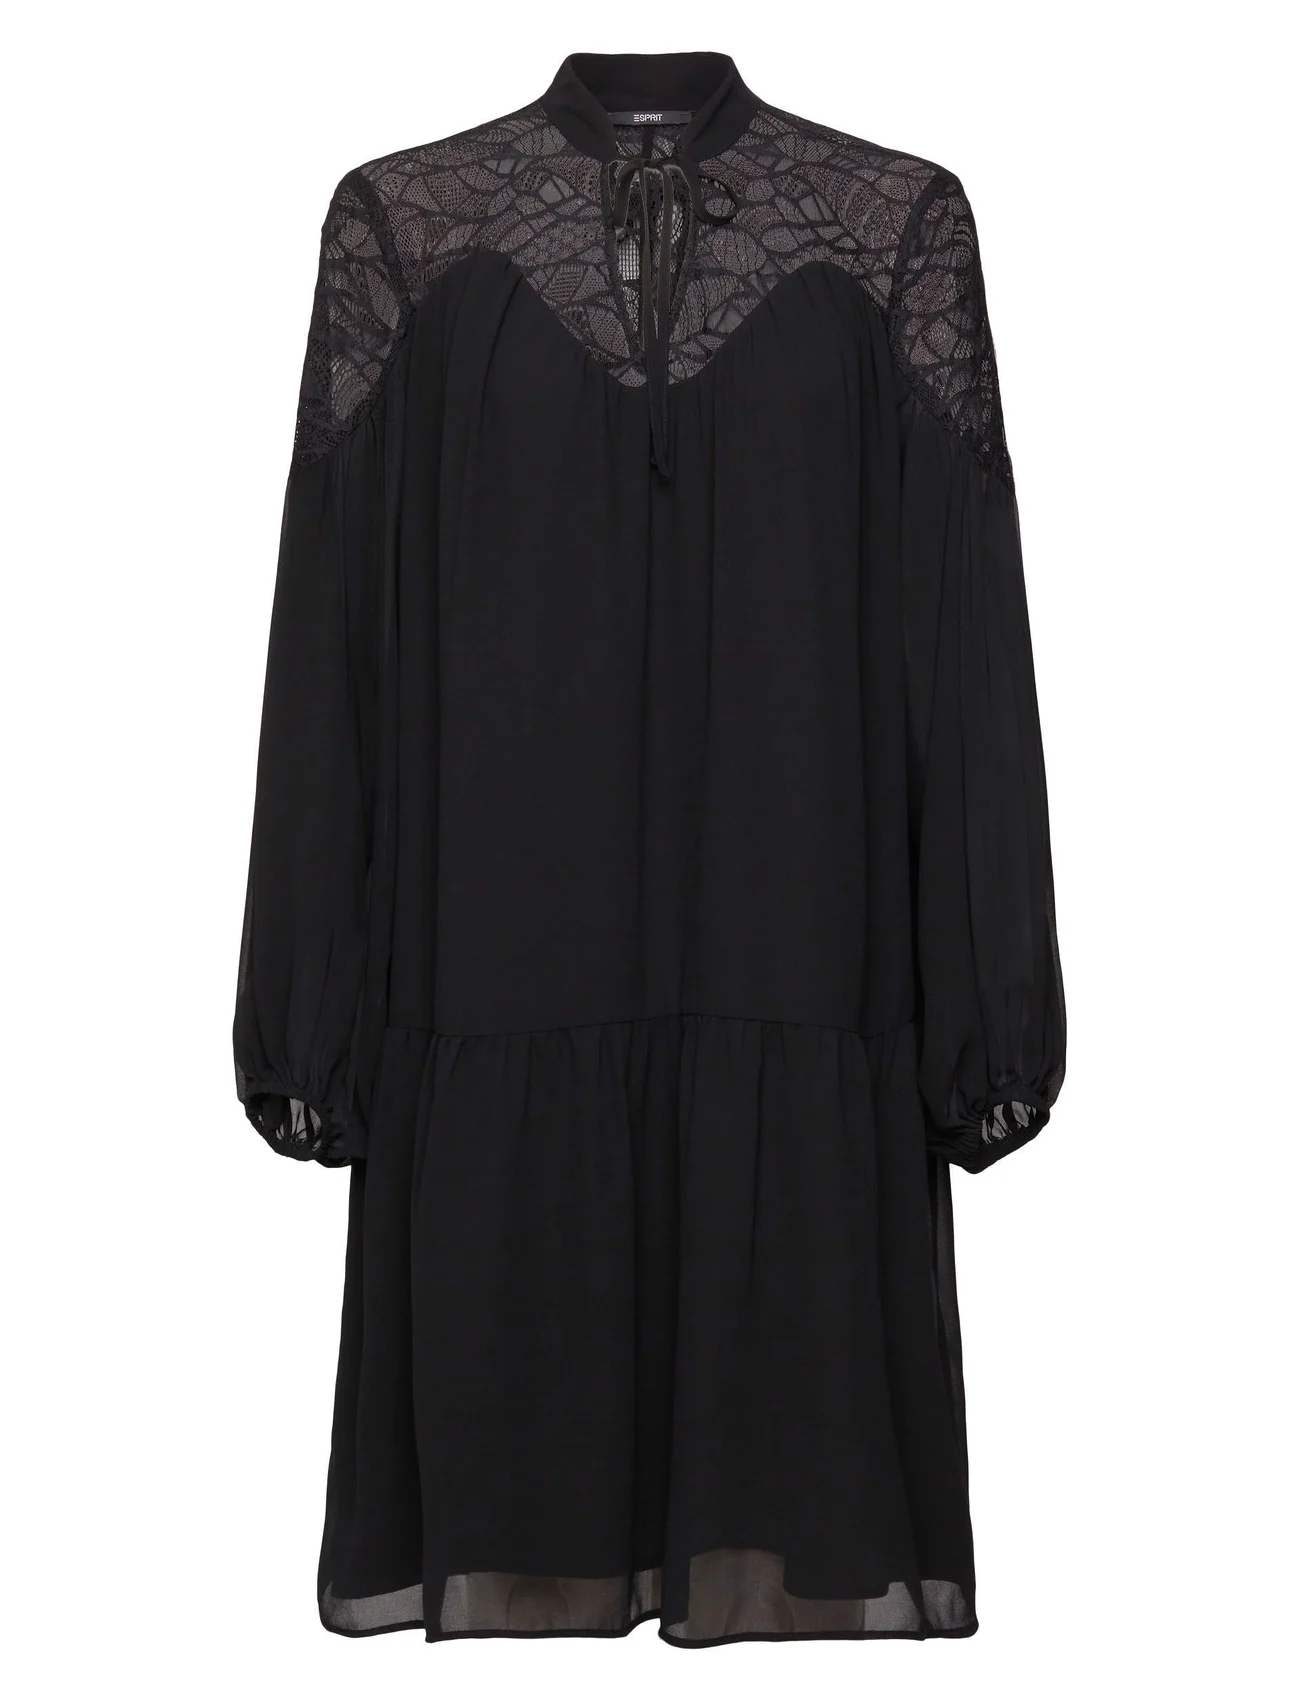 Esprit Collection - Chiffon mini dress with lace - festkläder till outletpriser - black - 0